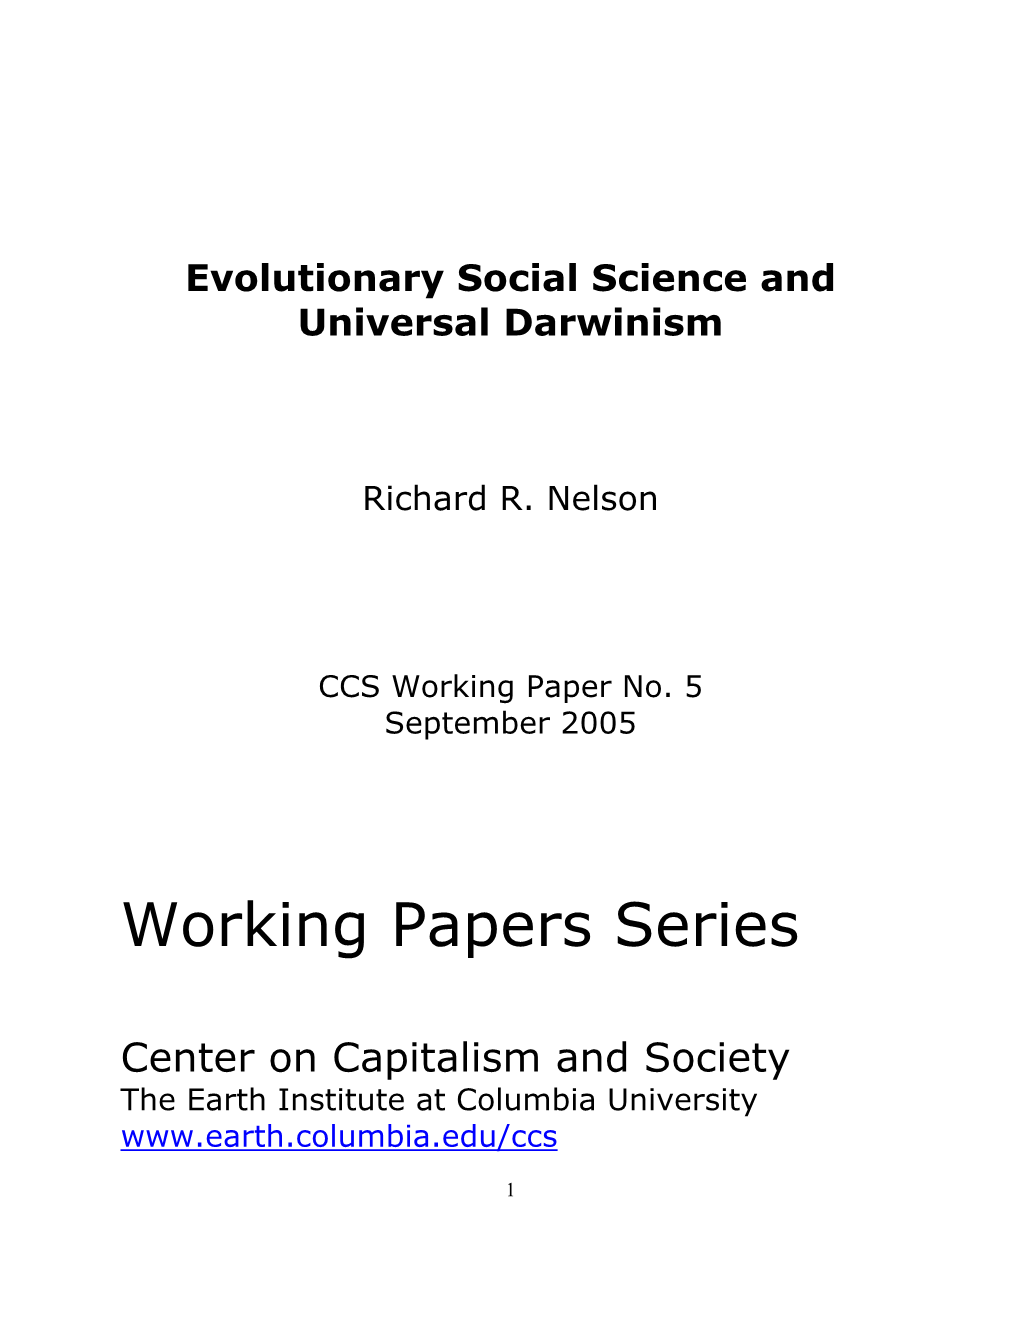 Evolutionary Social Science and Universal Darwinism